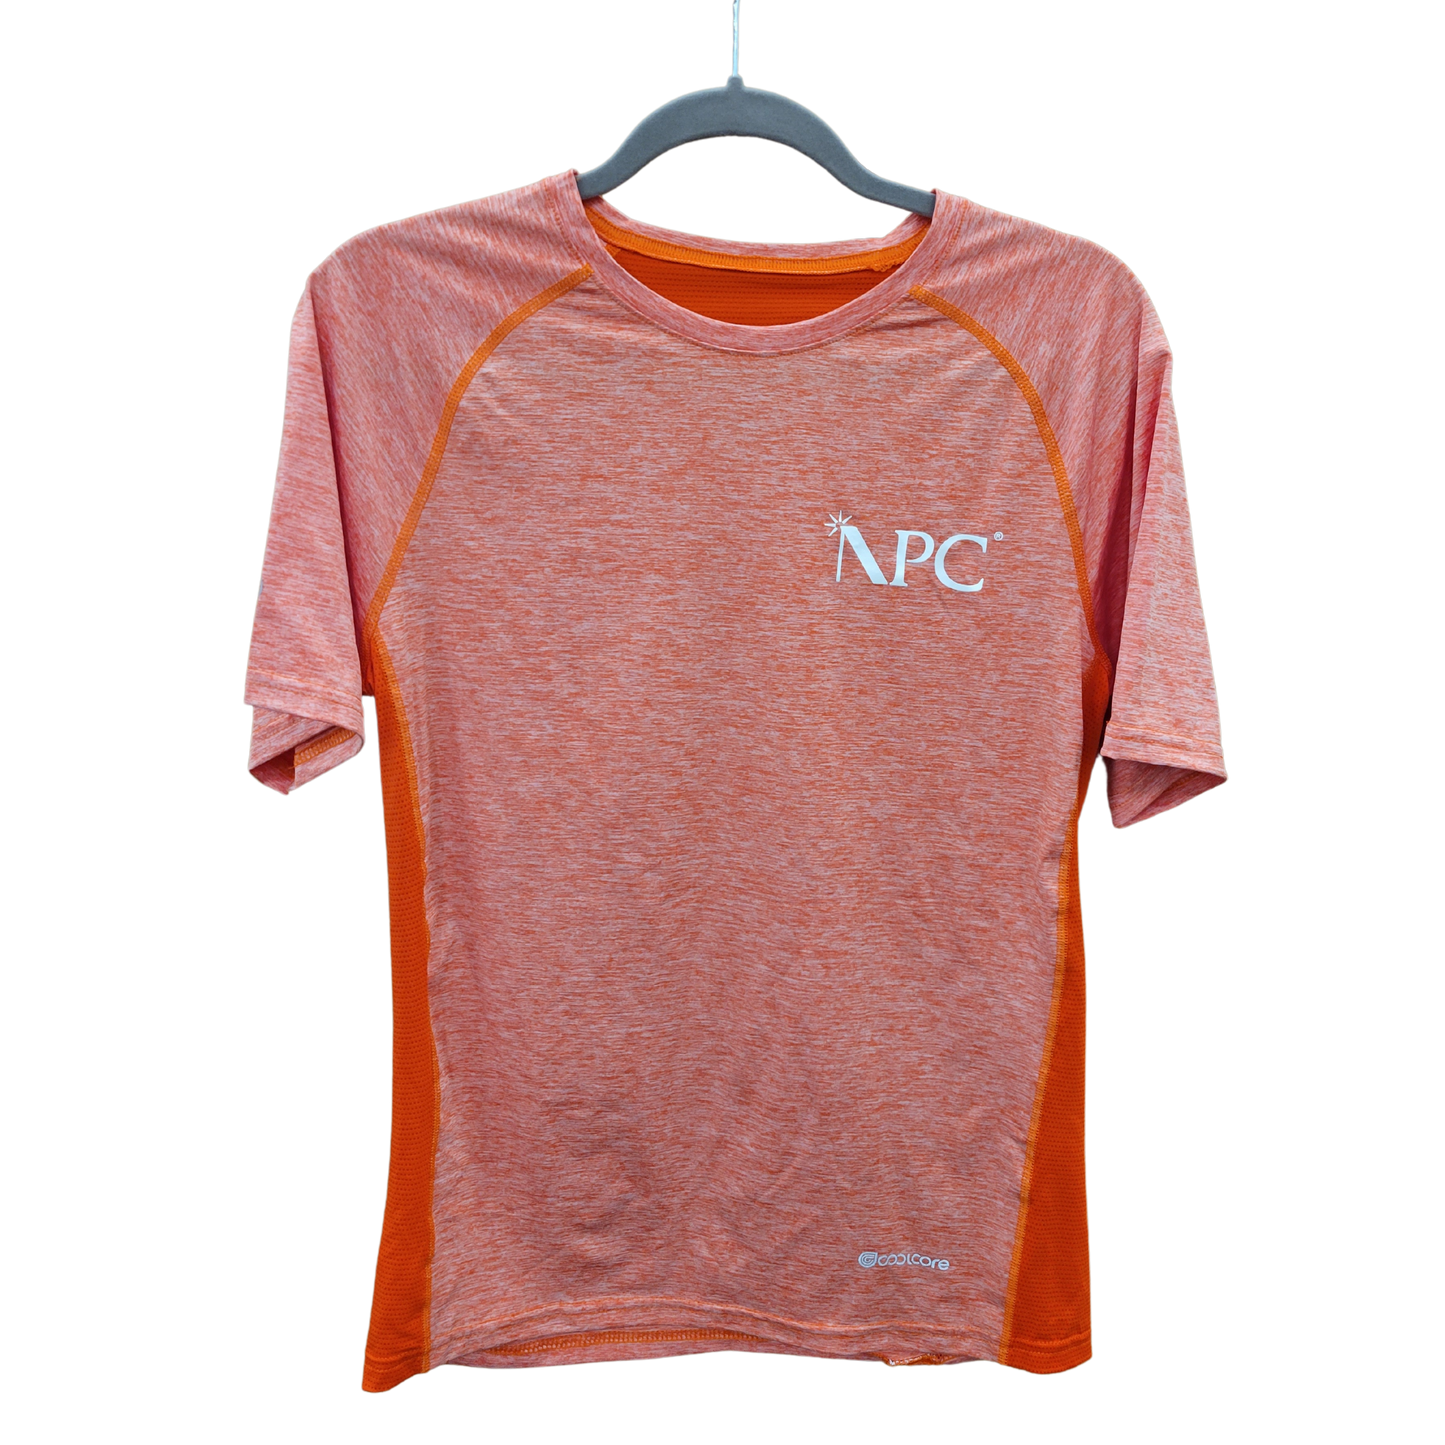 NPC Cooling Athletic T-Shirt